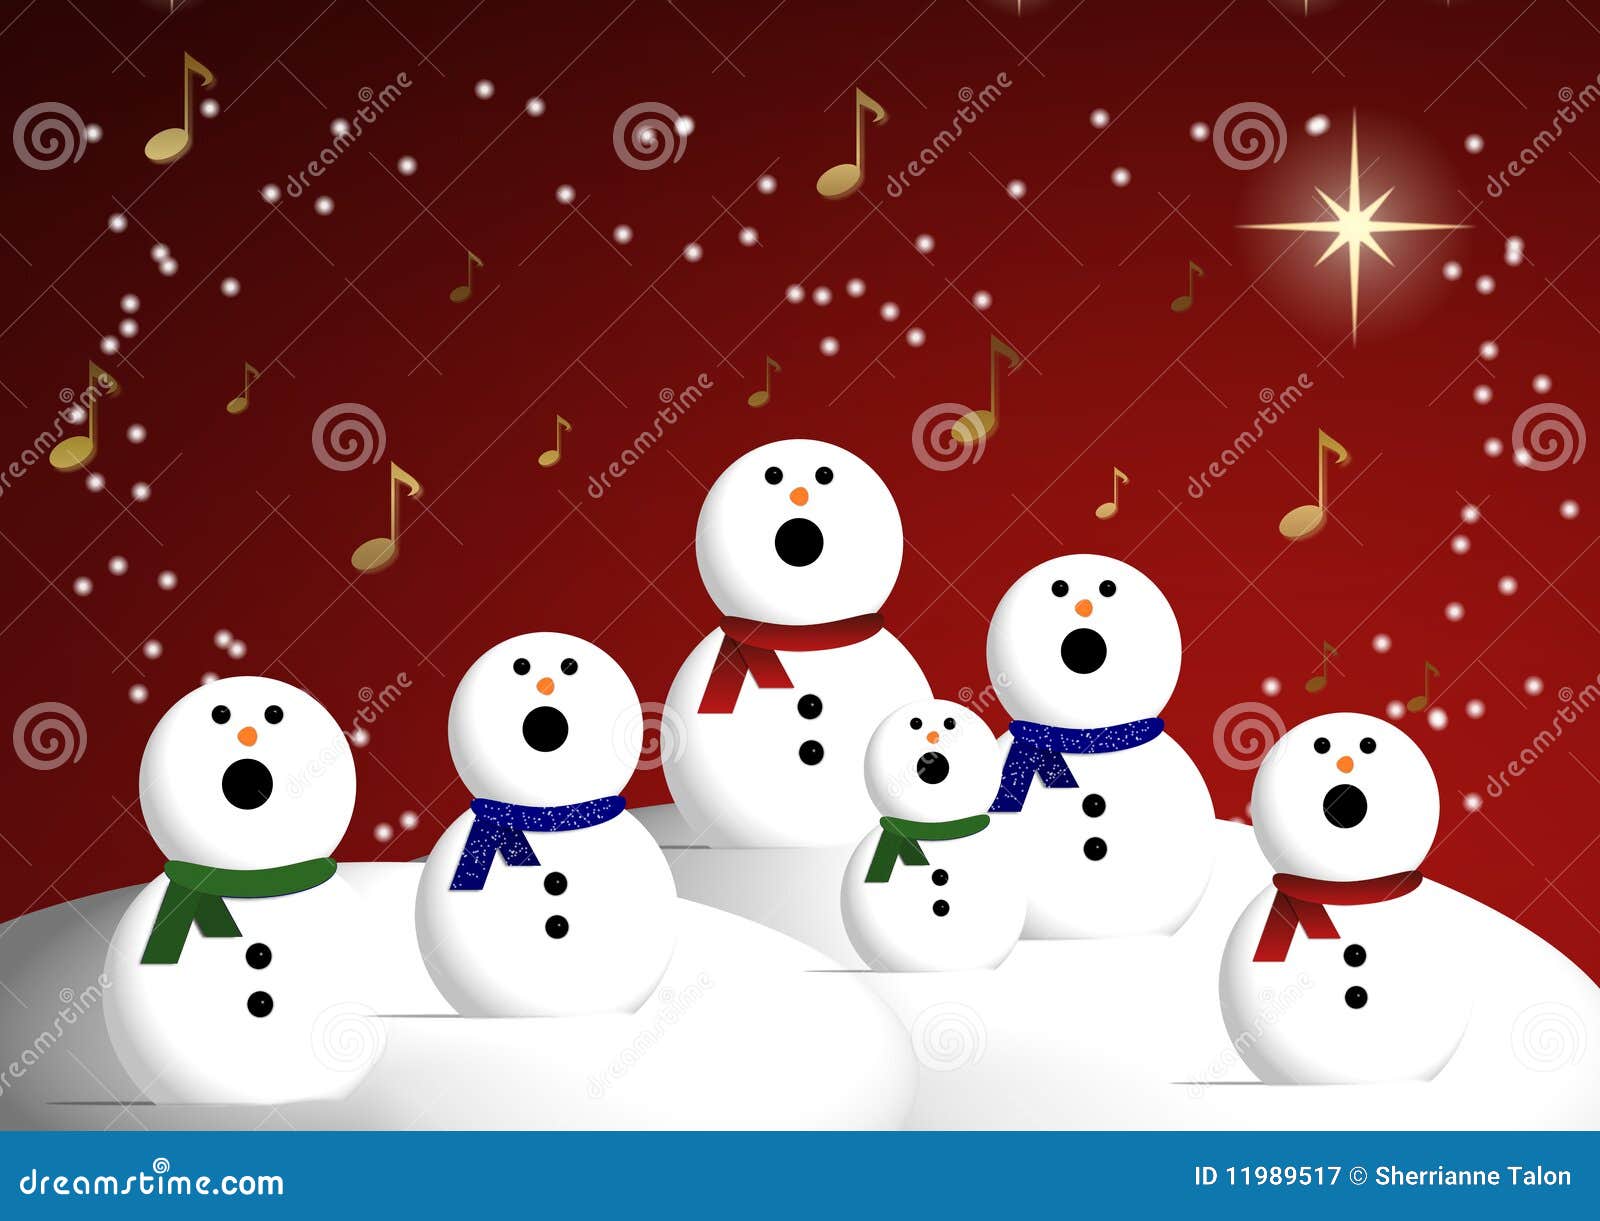 choir of snowmen